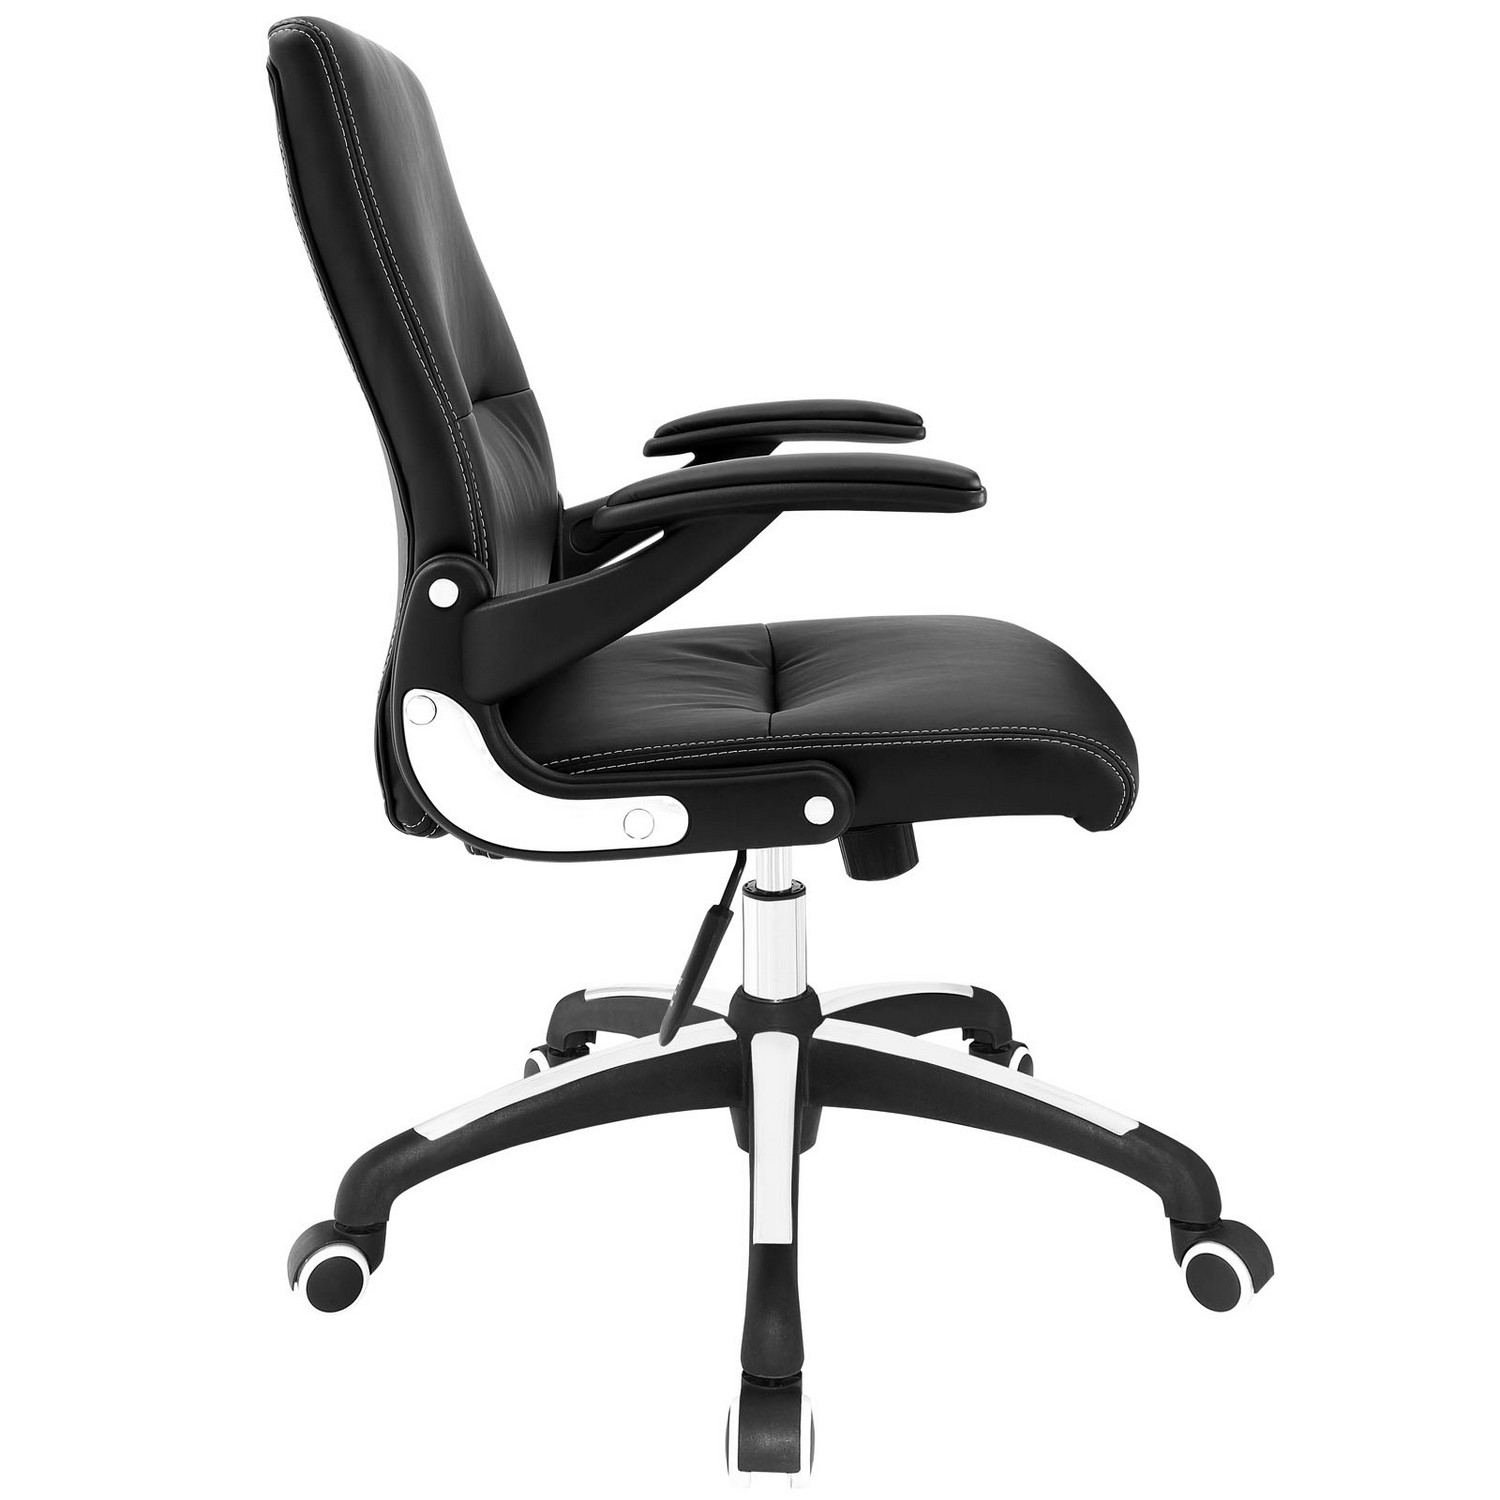 Modway Premier Highback Office Chair - Black